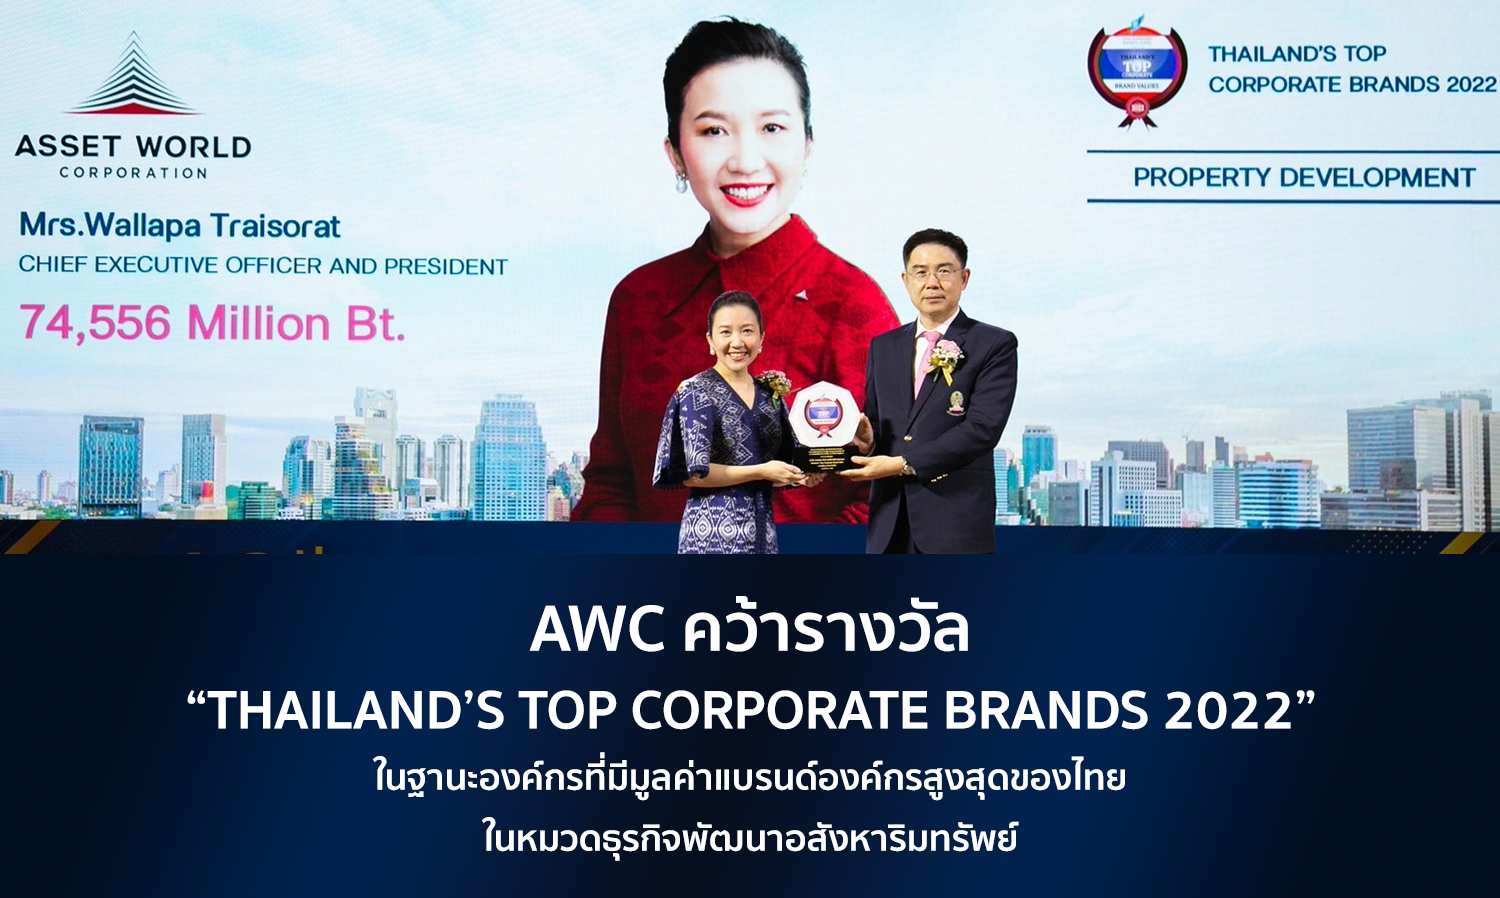 awc-คว้ารางวัล-“thailand’s-top-corporate-brands-2022”-ในฐานะ-